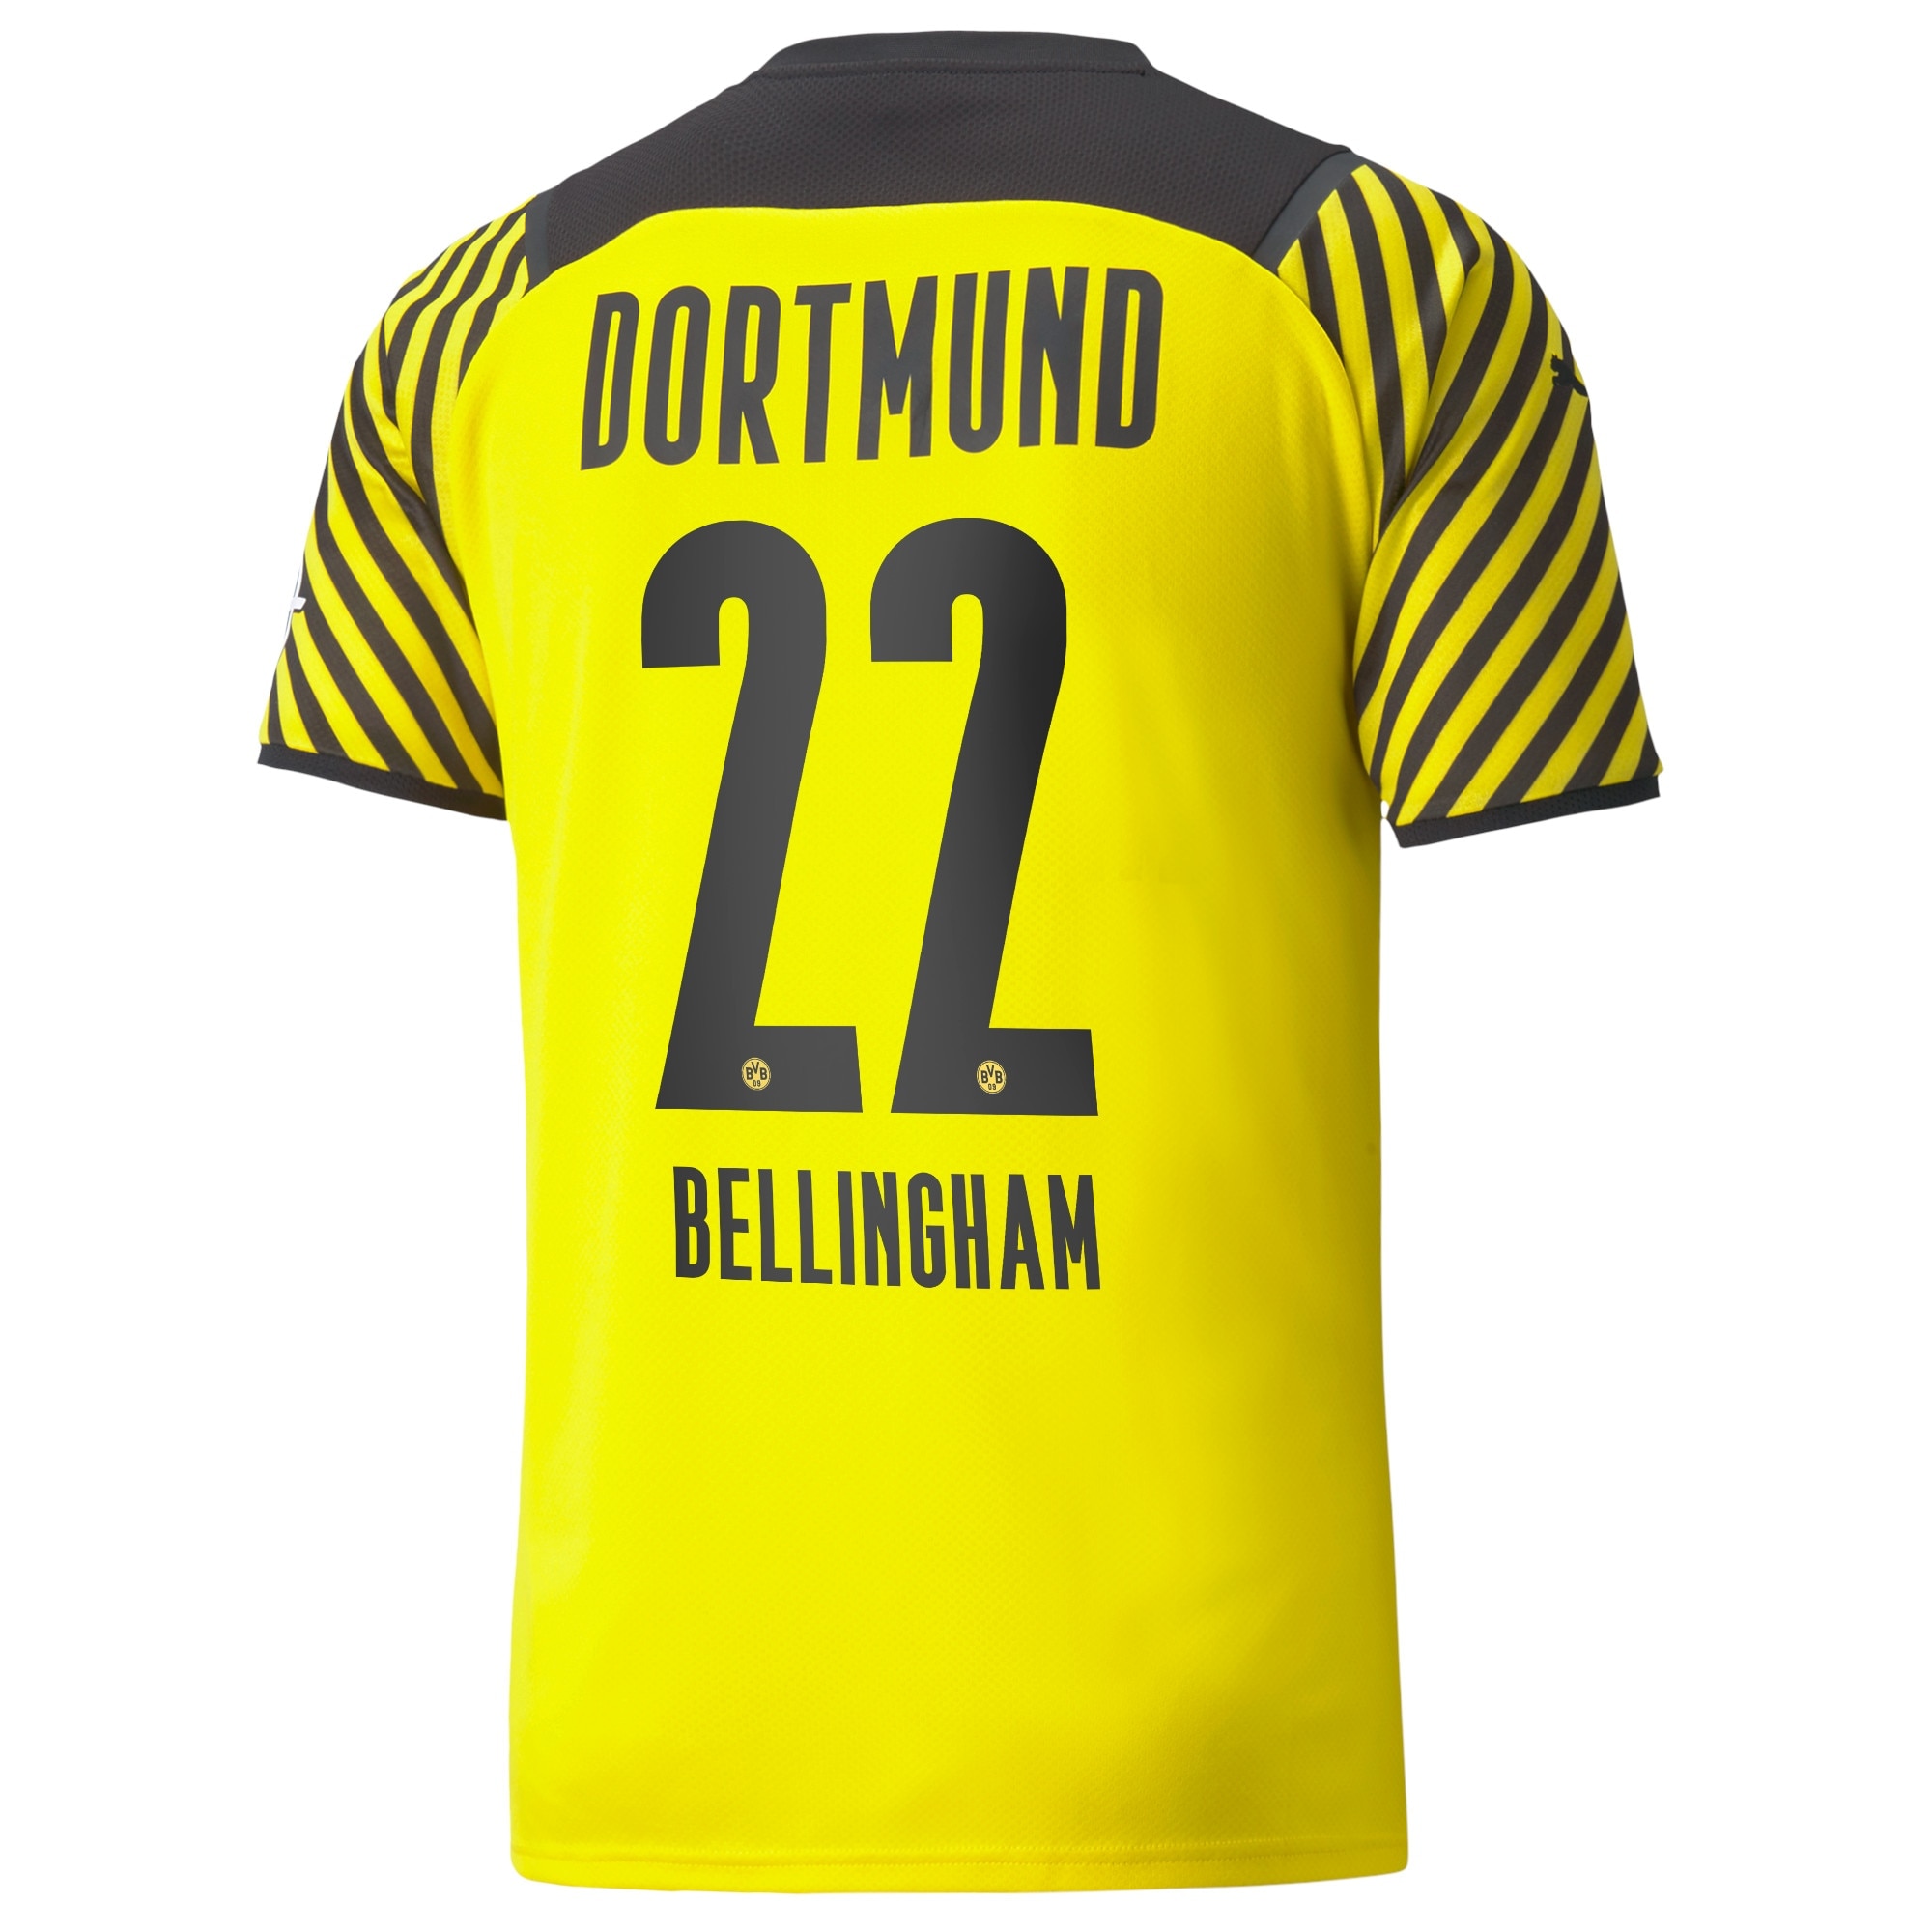 Borussia Dortmund Home Shirt 2021-22 with Bellingham 22 printing